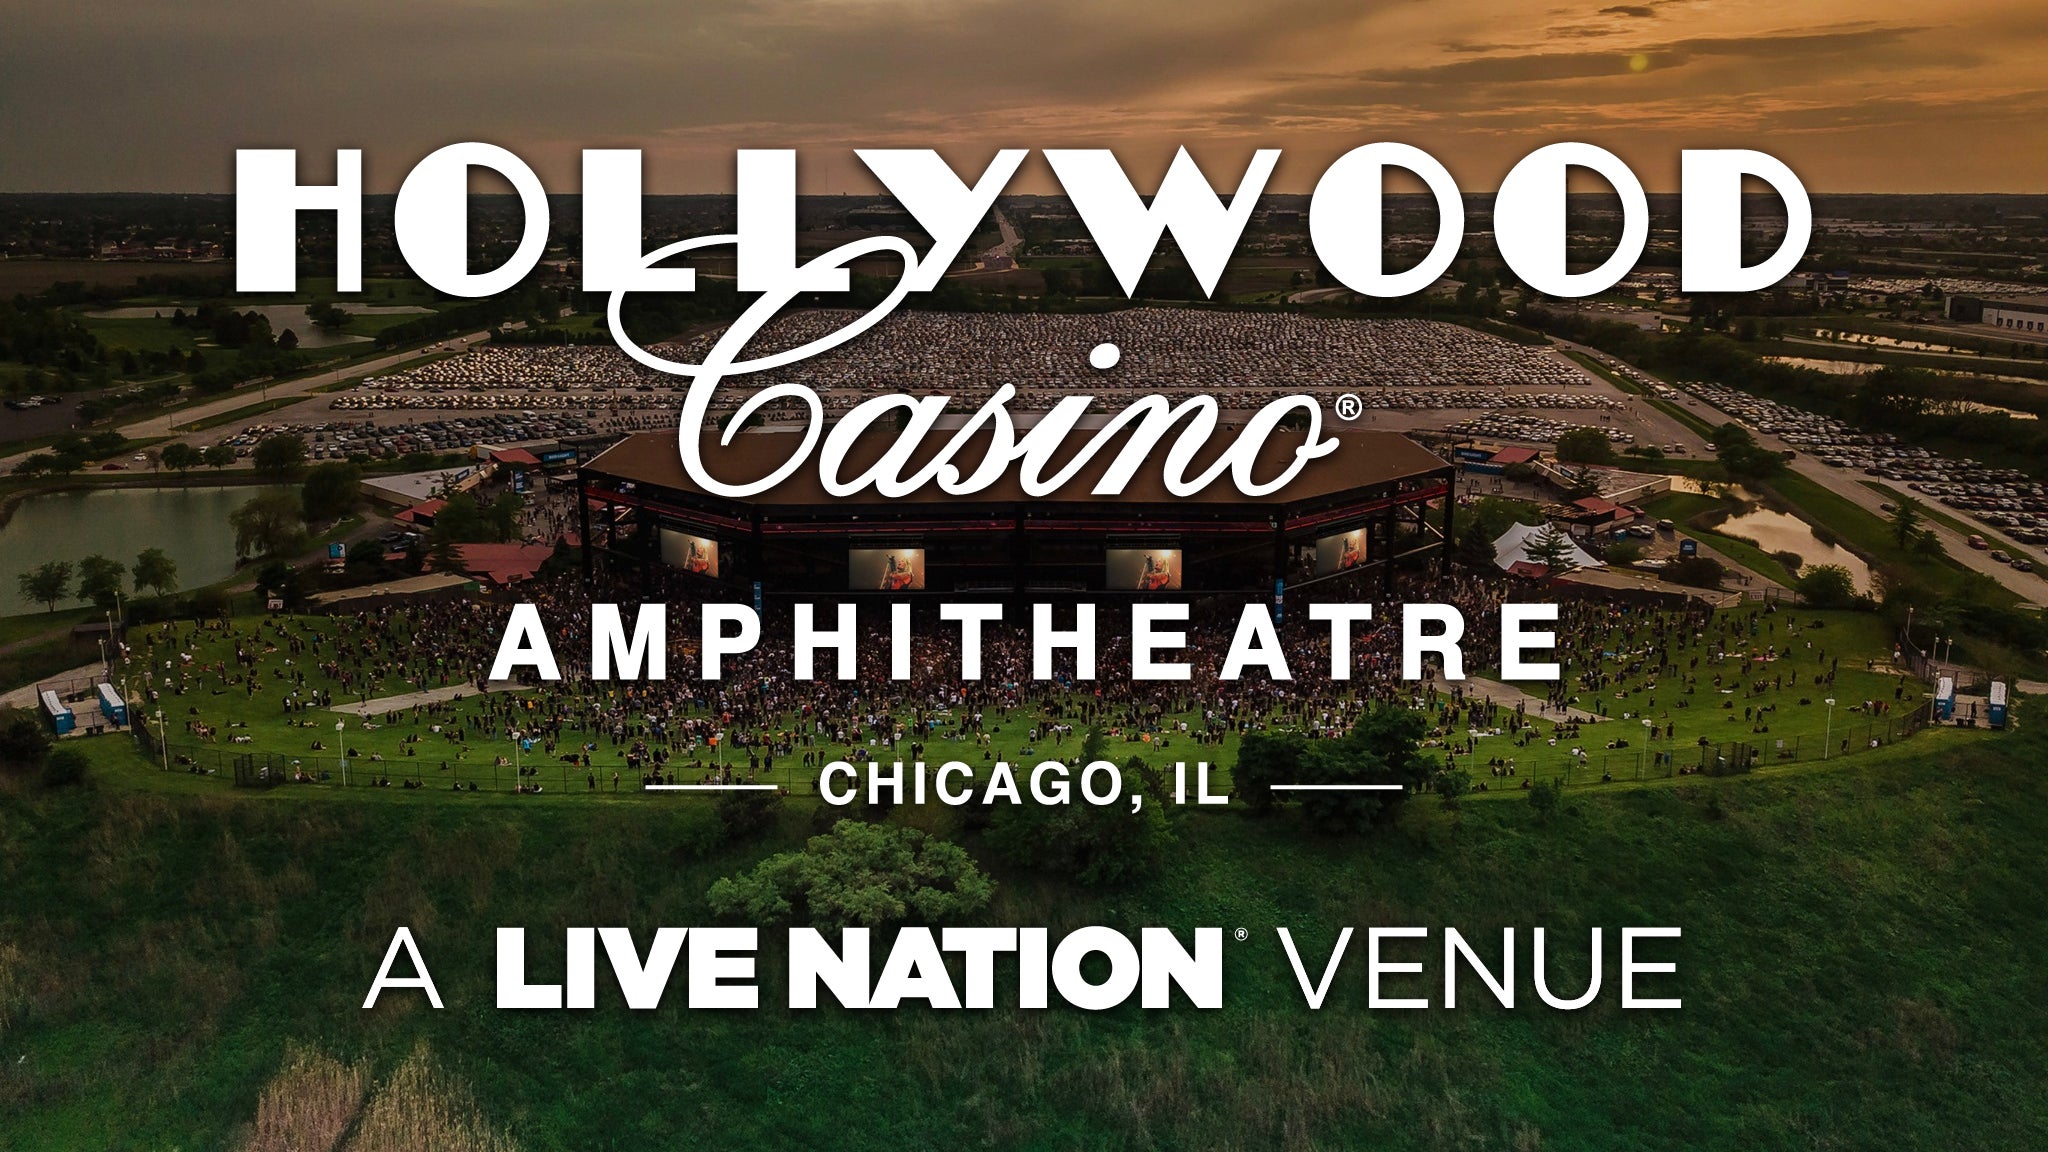 hollywood casino amphitheater chicago